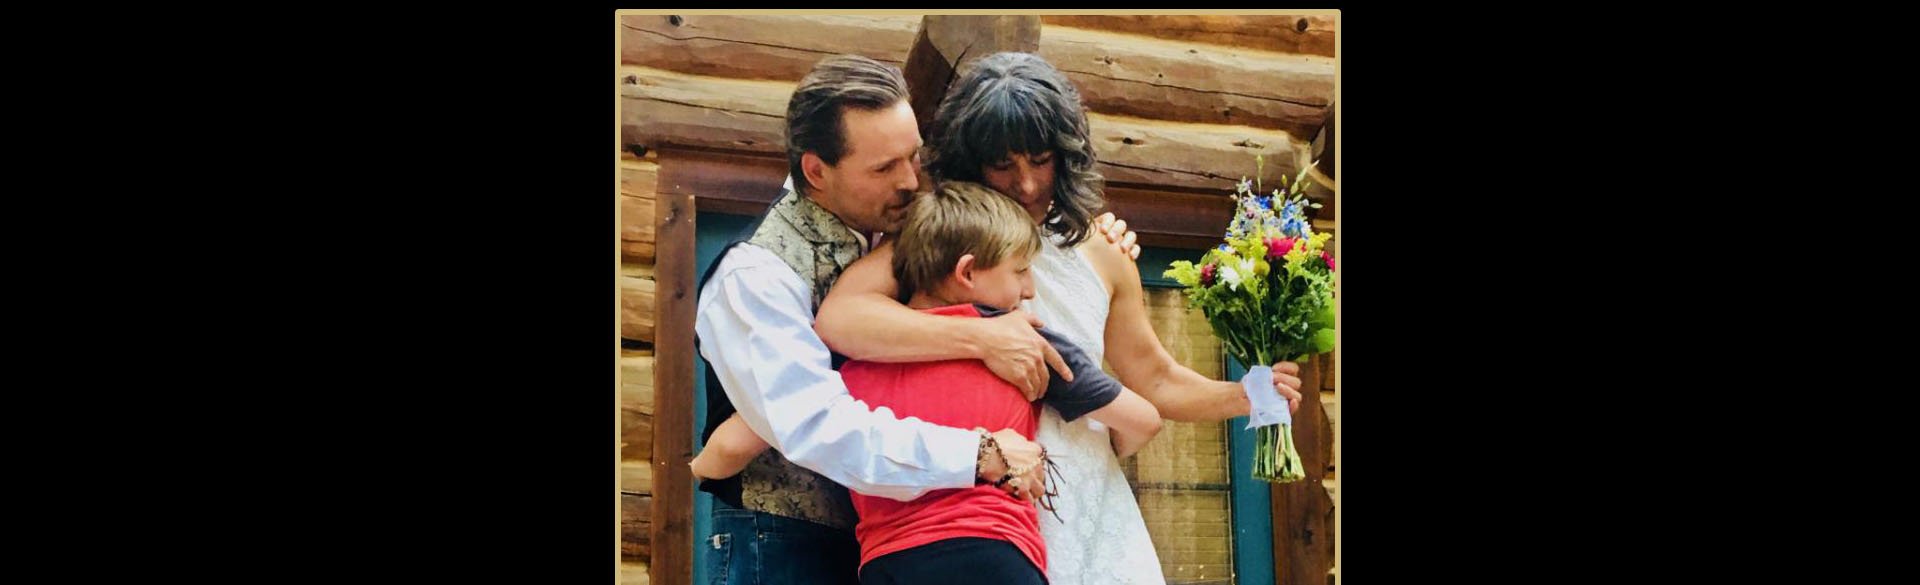 Scott Ferguson, wife Darice Henritze and son celebrate a trio marriage.